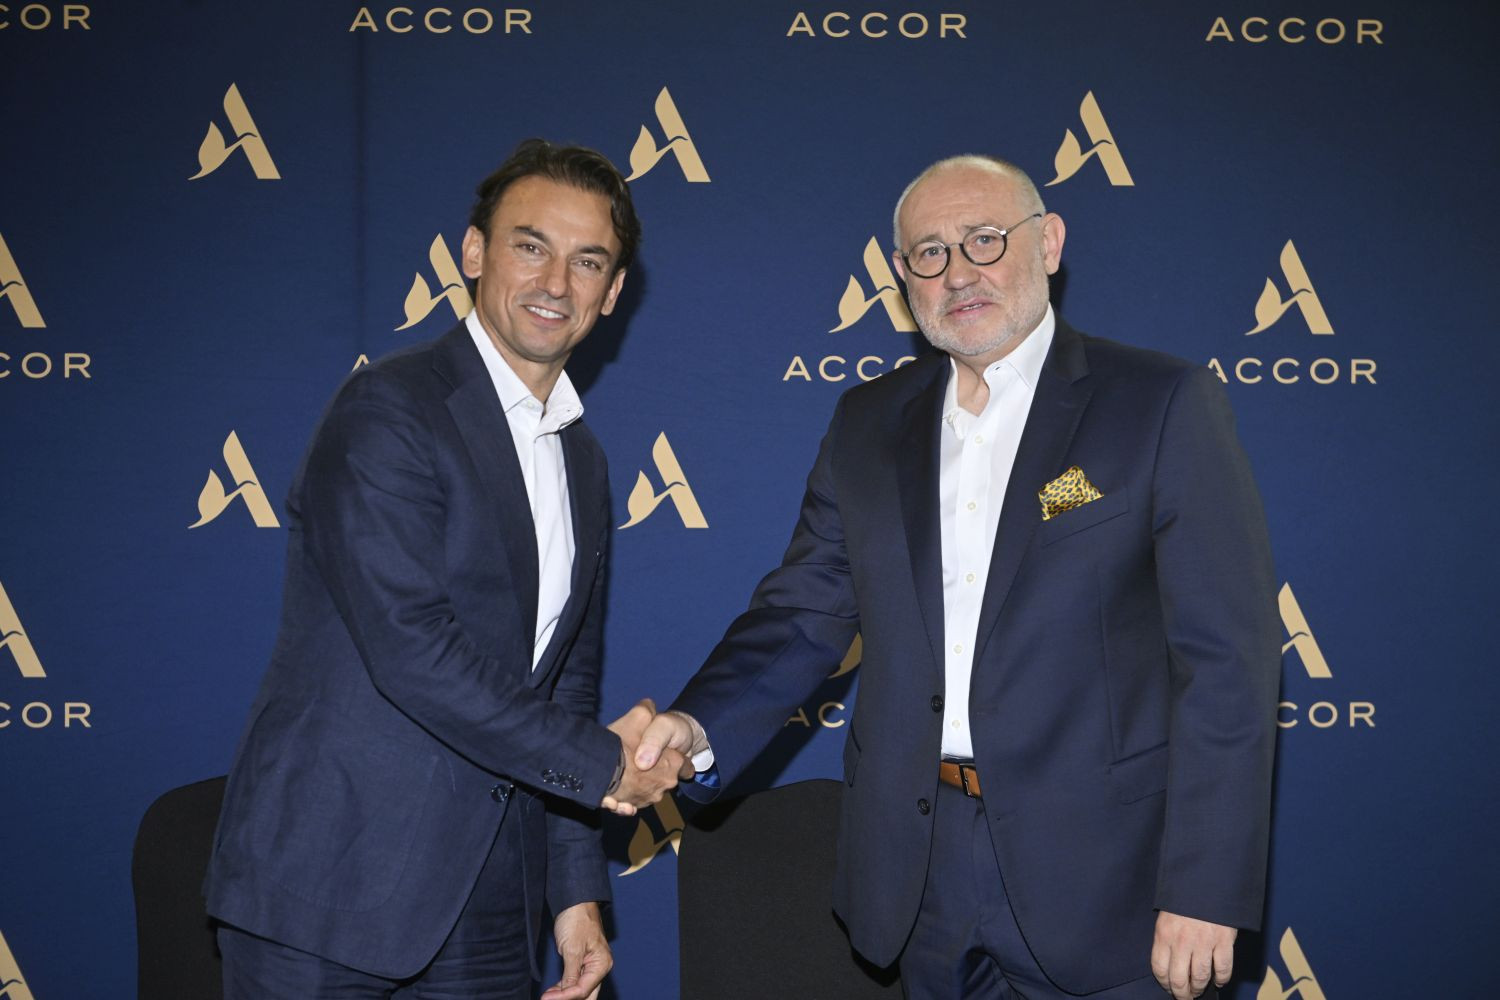 Patrick Mendes, CEO Europe & North Africa Accor - Premium, Midscale & Economy i dr Grzegorz Goryszewski Allenort CEO